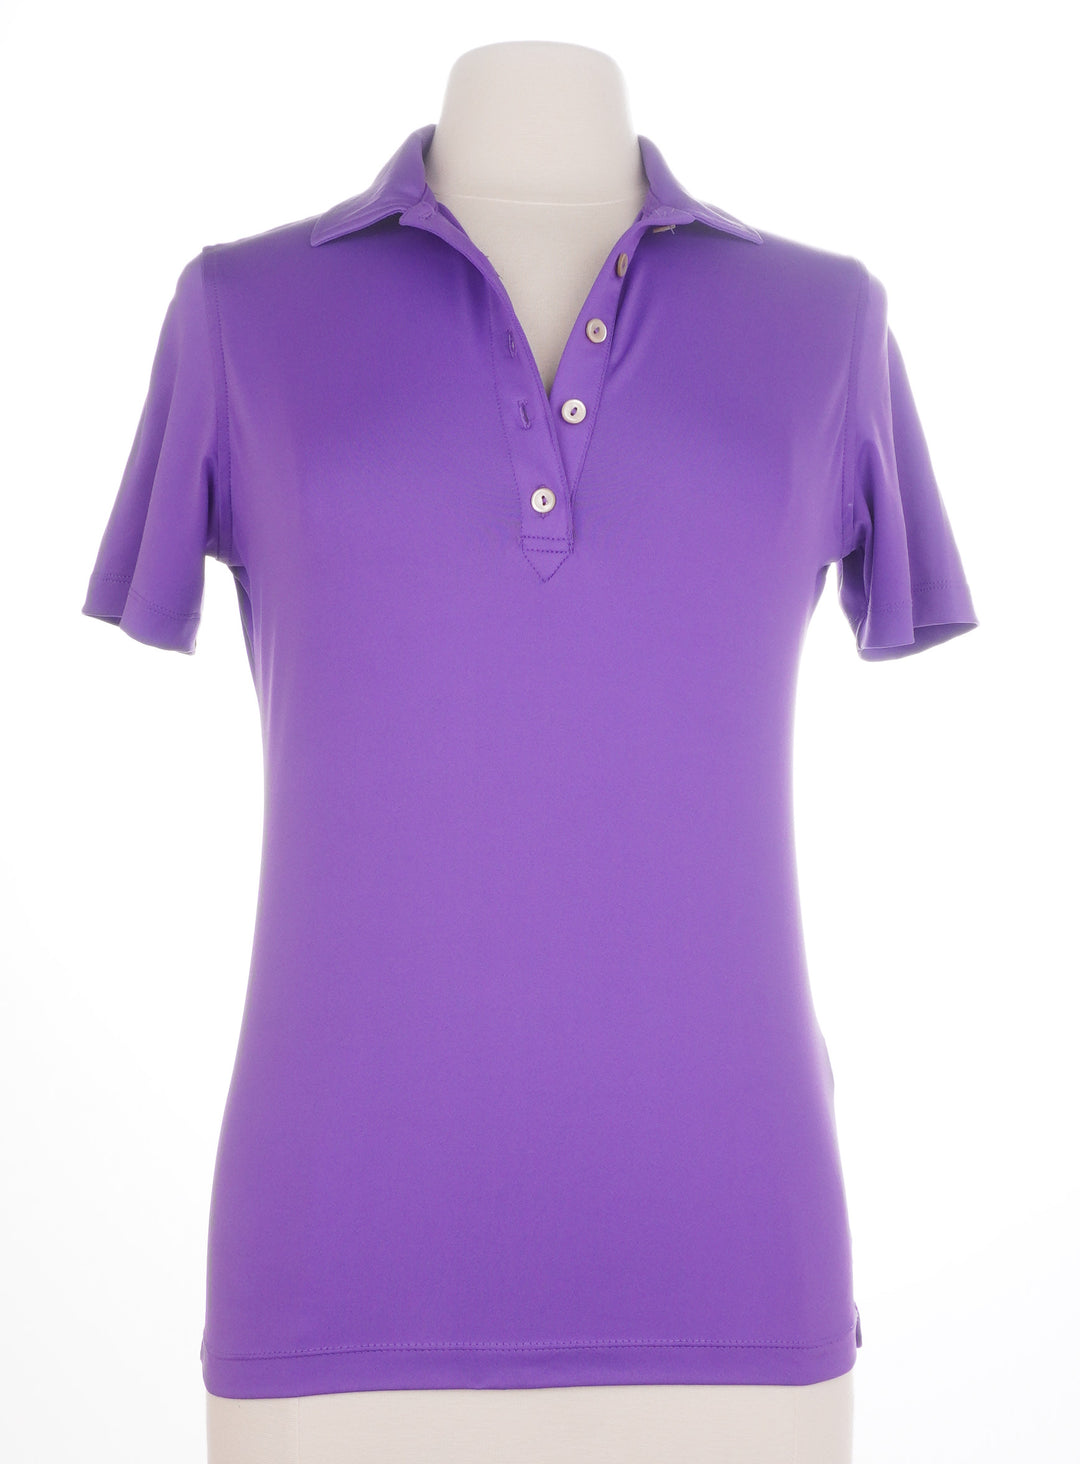 Peter Millar Purple Short Sleeve Top - Size Small - Skorzie